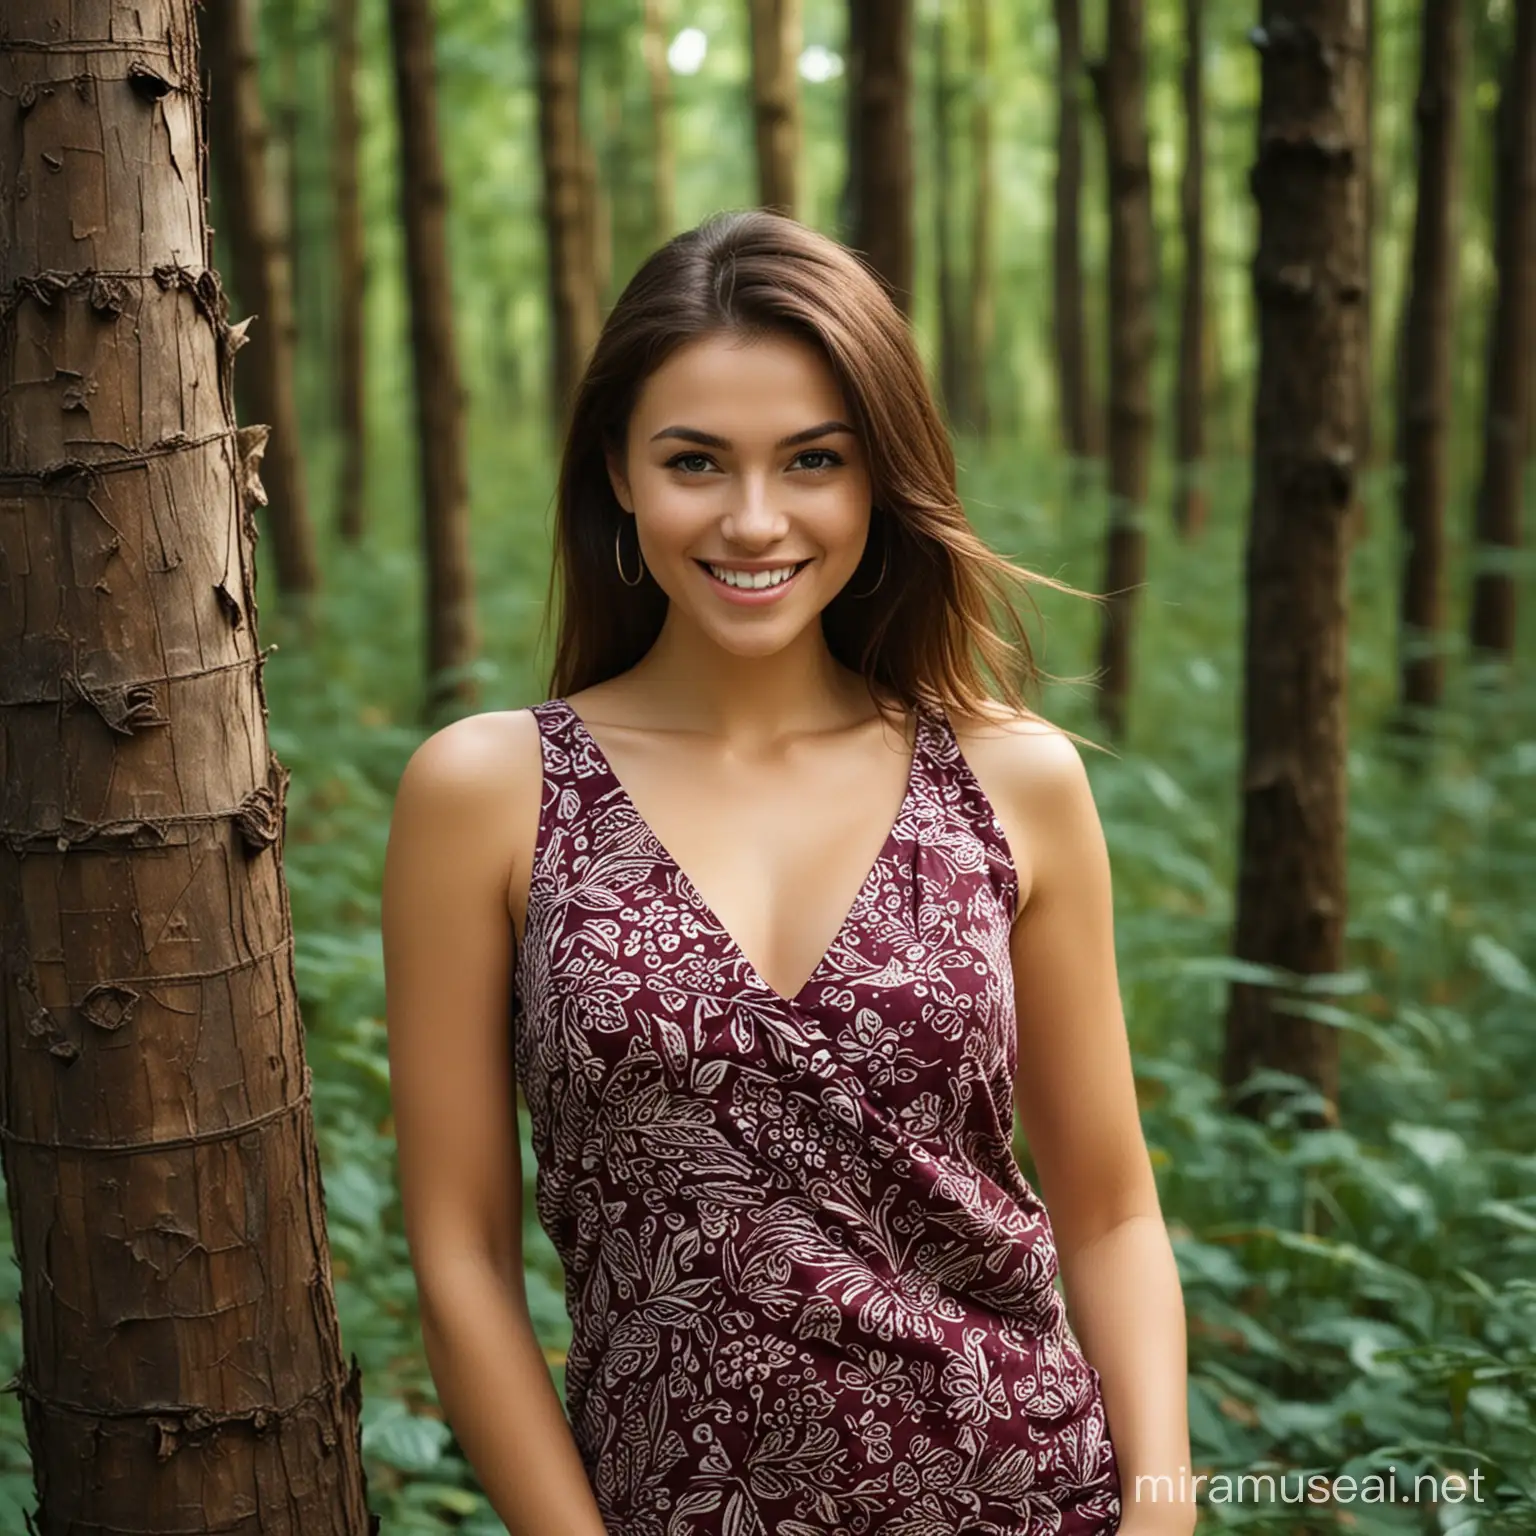 Beautiful Woman Smiling in Batik Dress Amidst Forest Setting